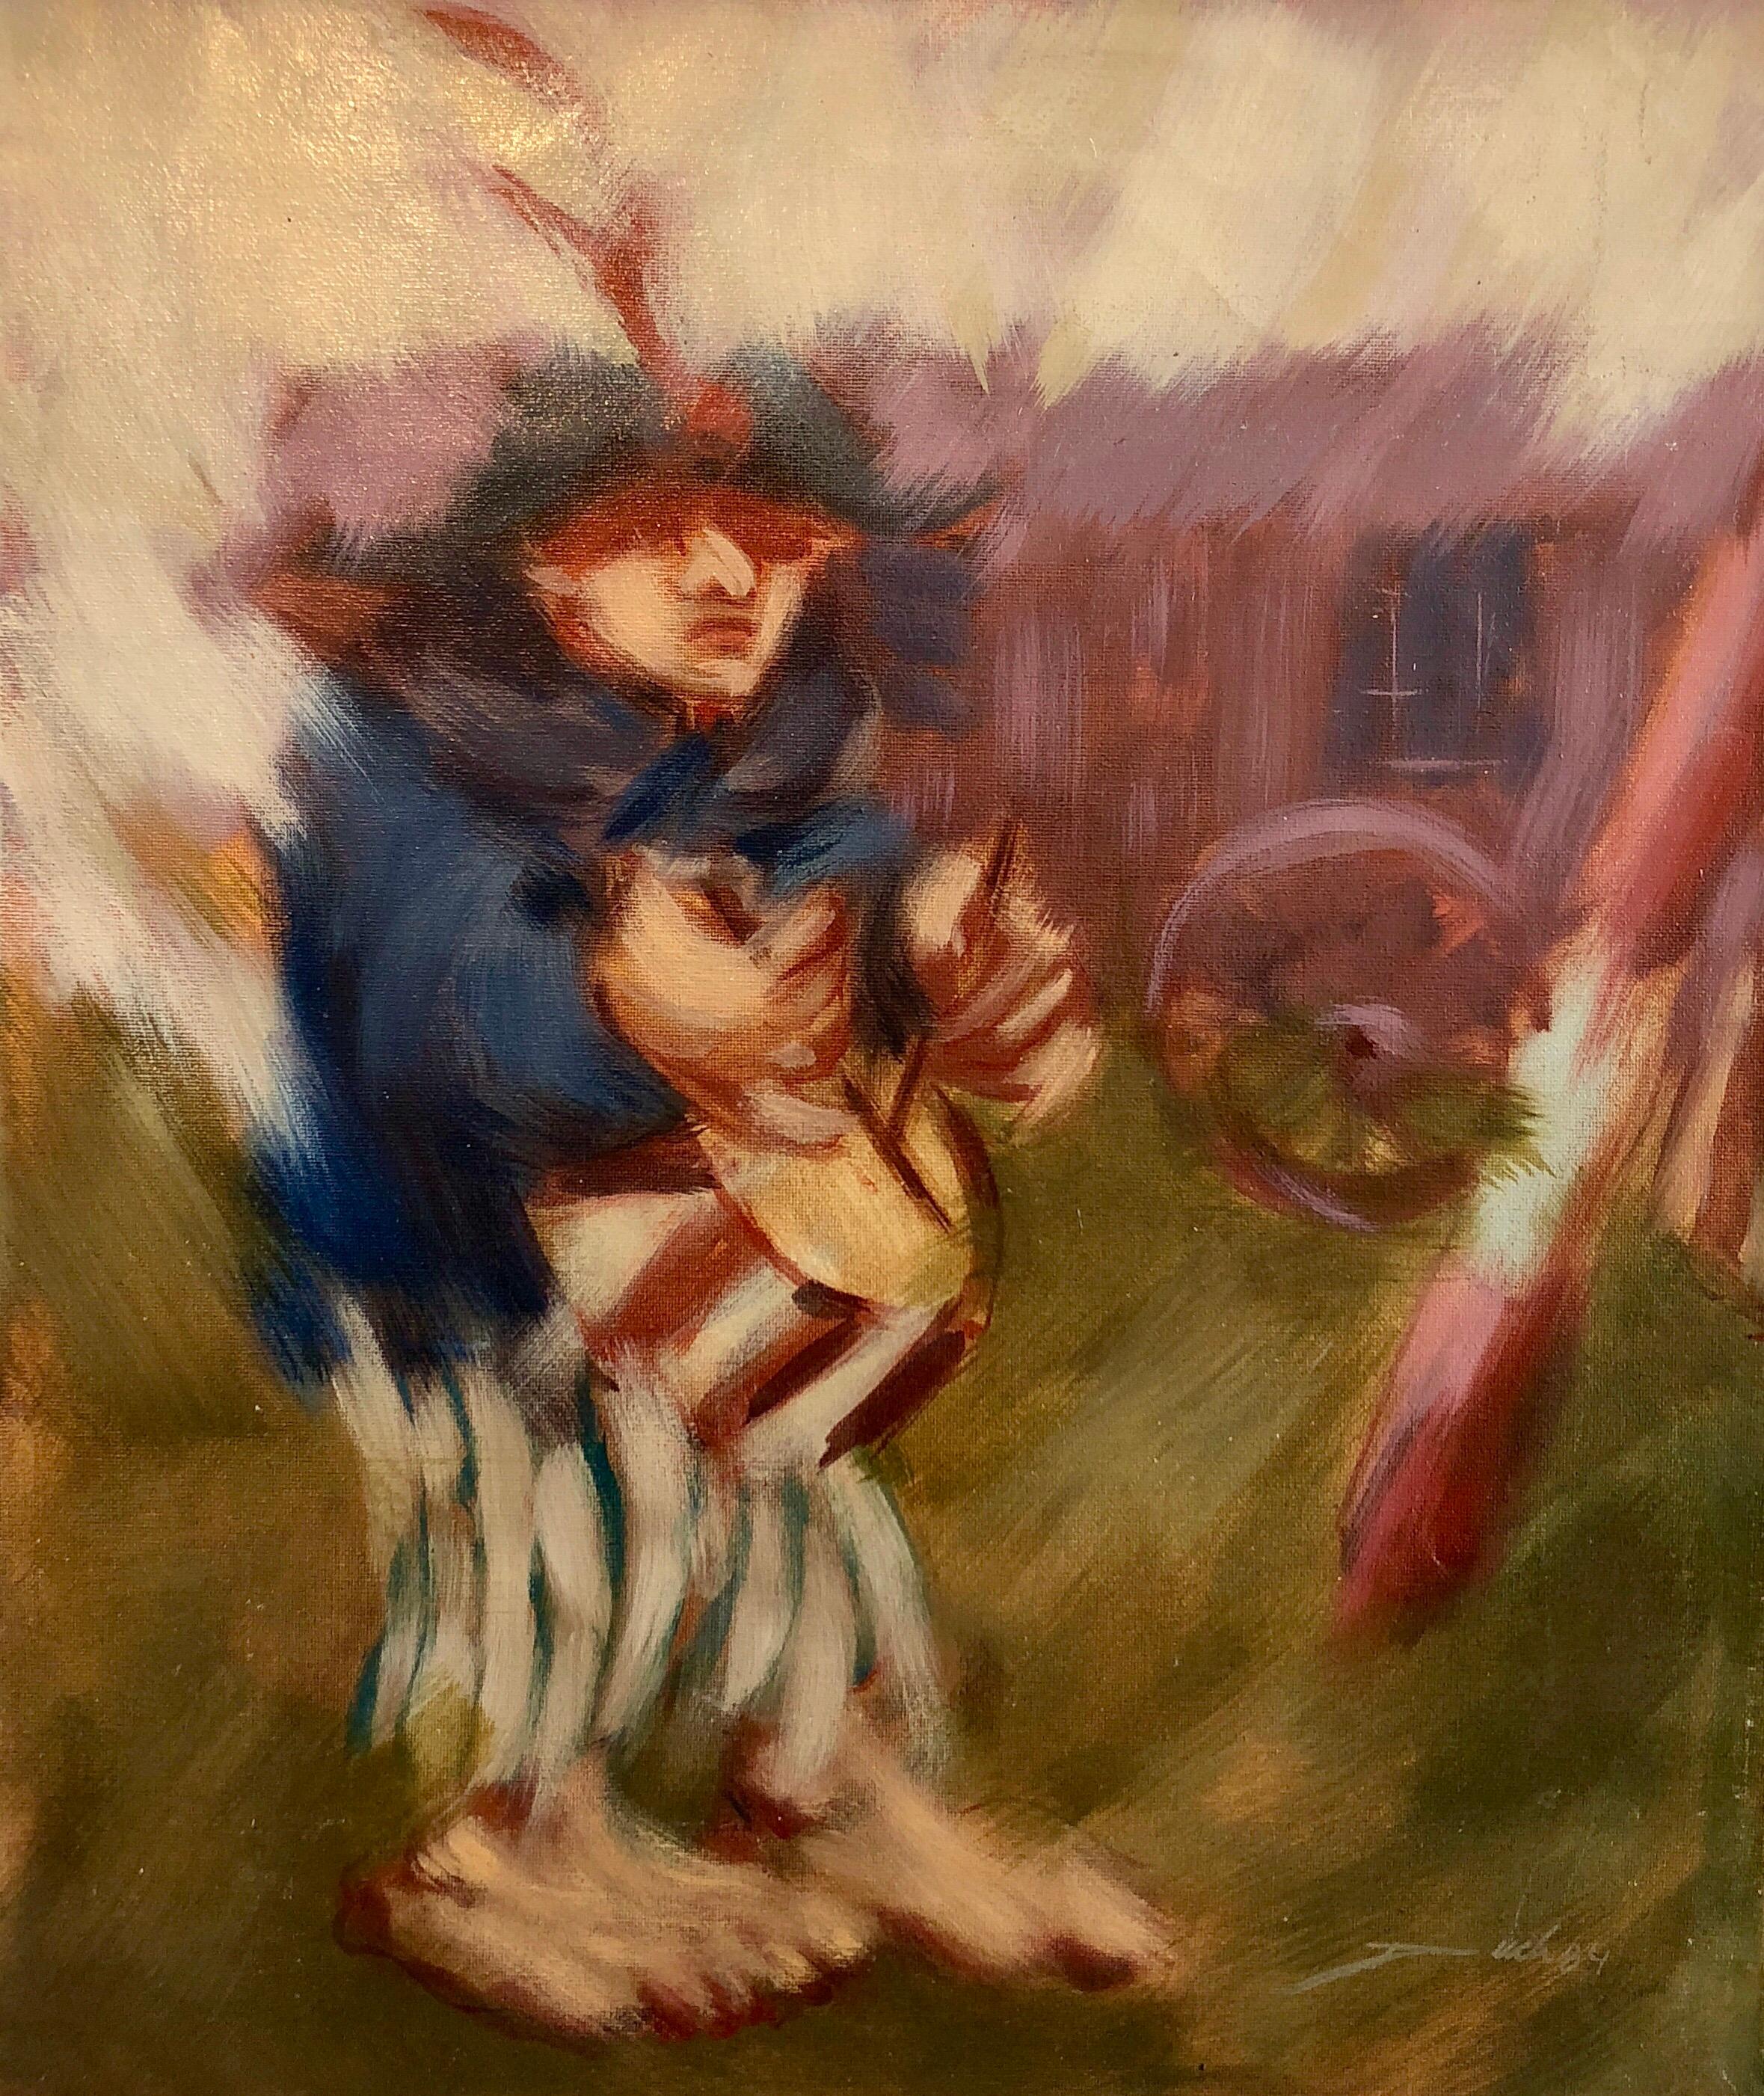 Peinture à l'huile moderniste espagnole d'un garçon tambouriste - Abstraction figurative